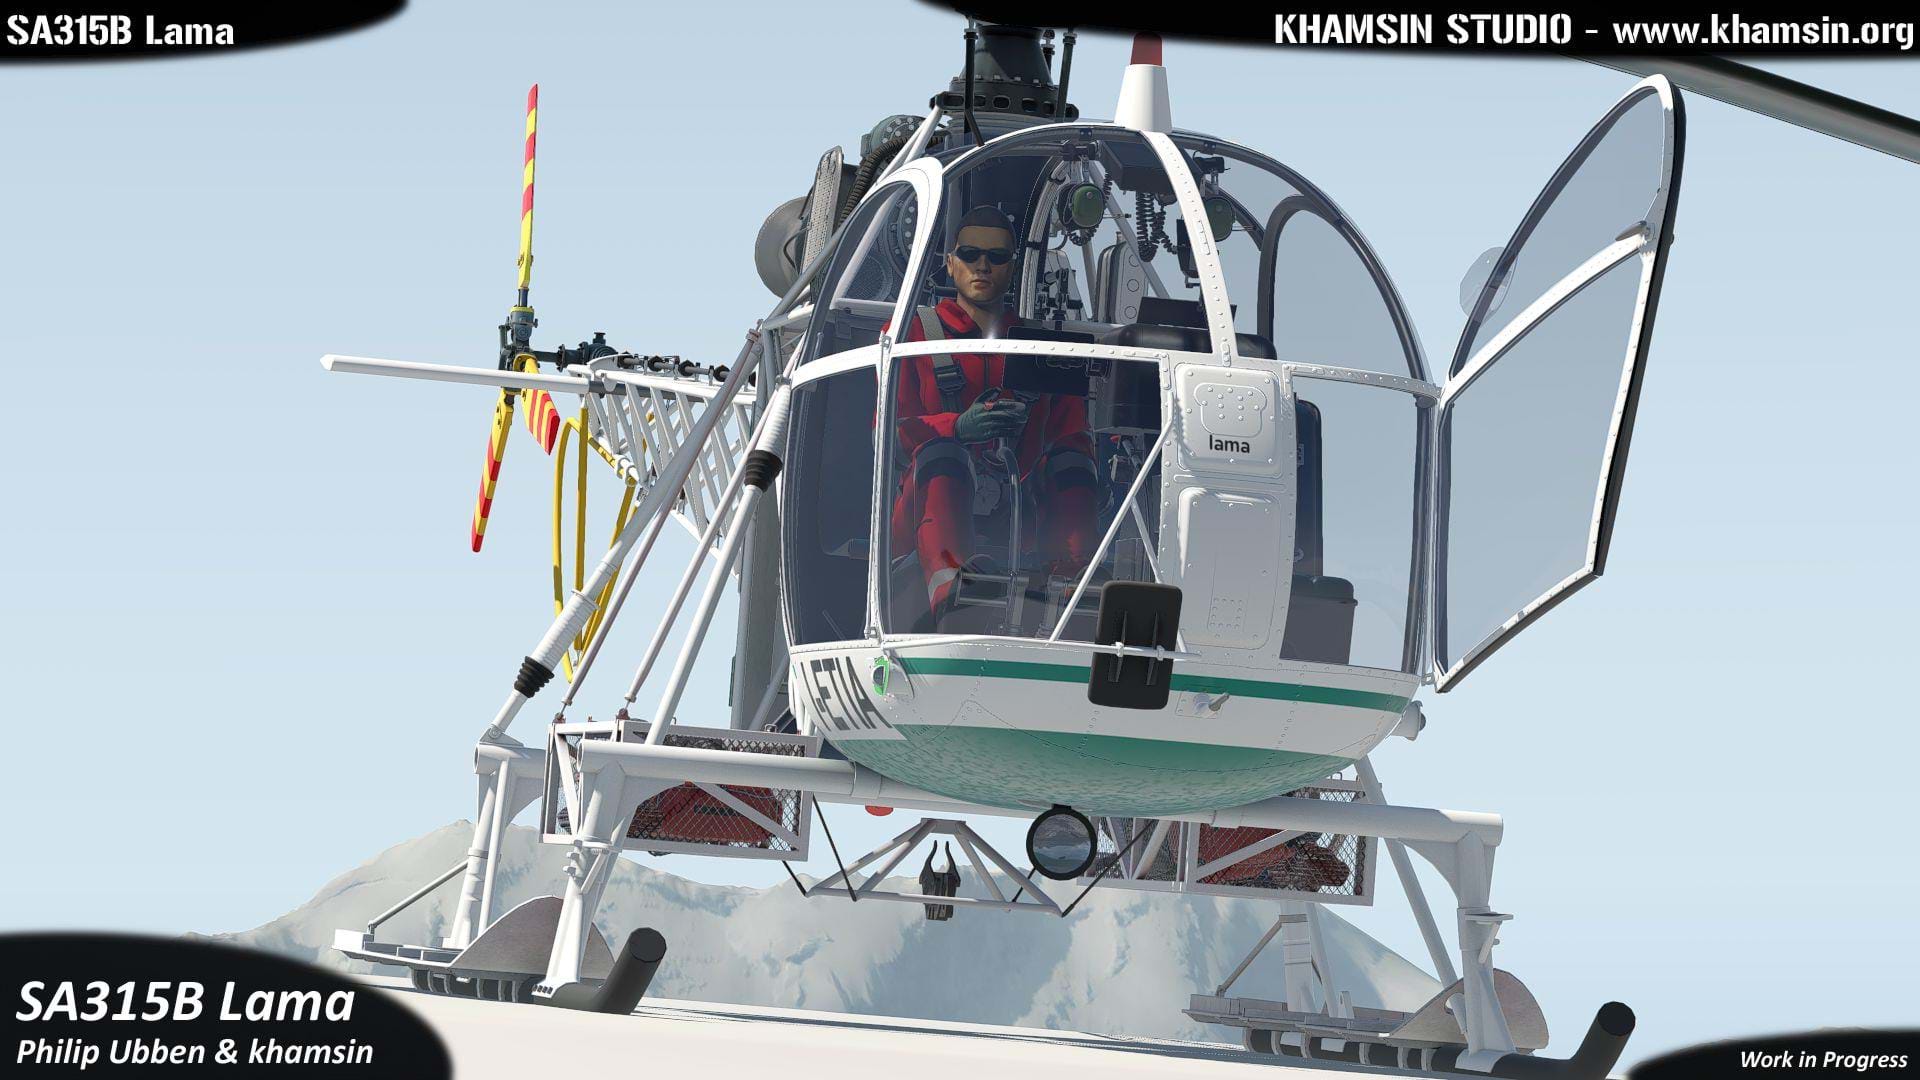 Philip Ubben and Khamsin Studio SA-315B Lama for X-Plane